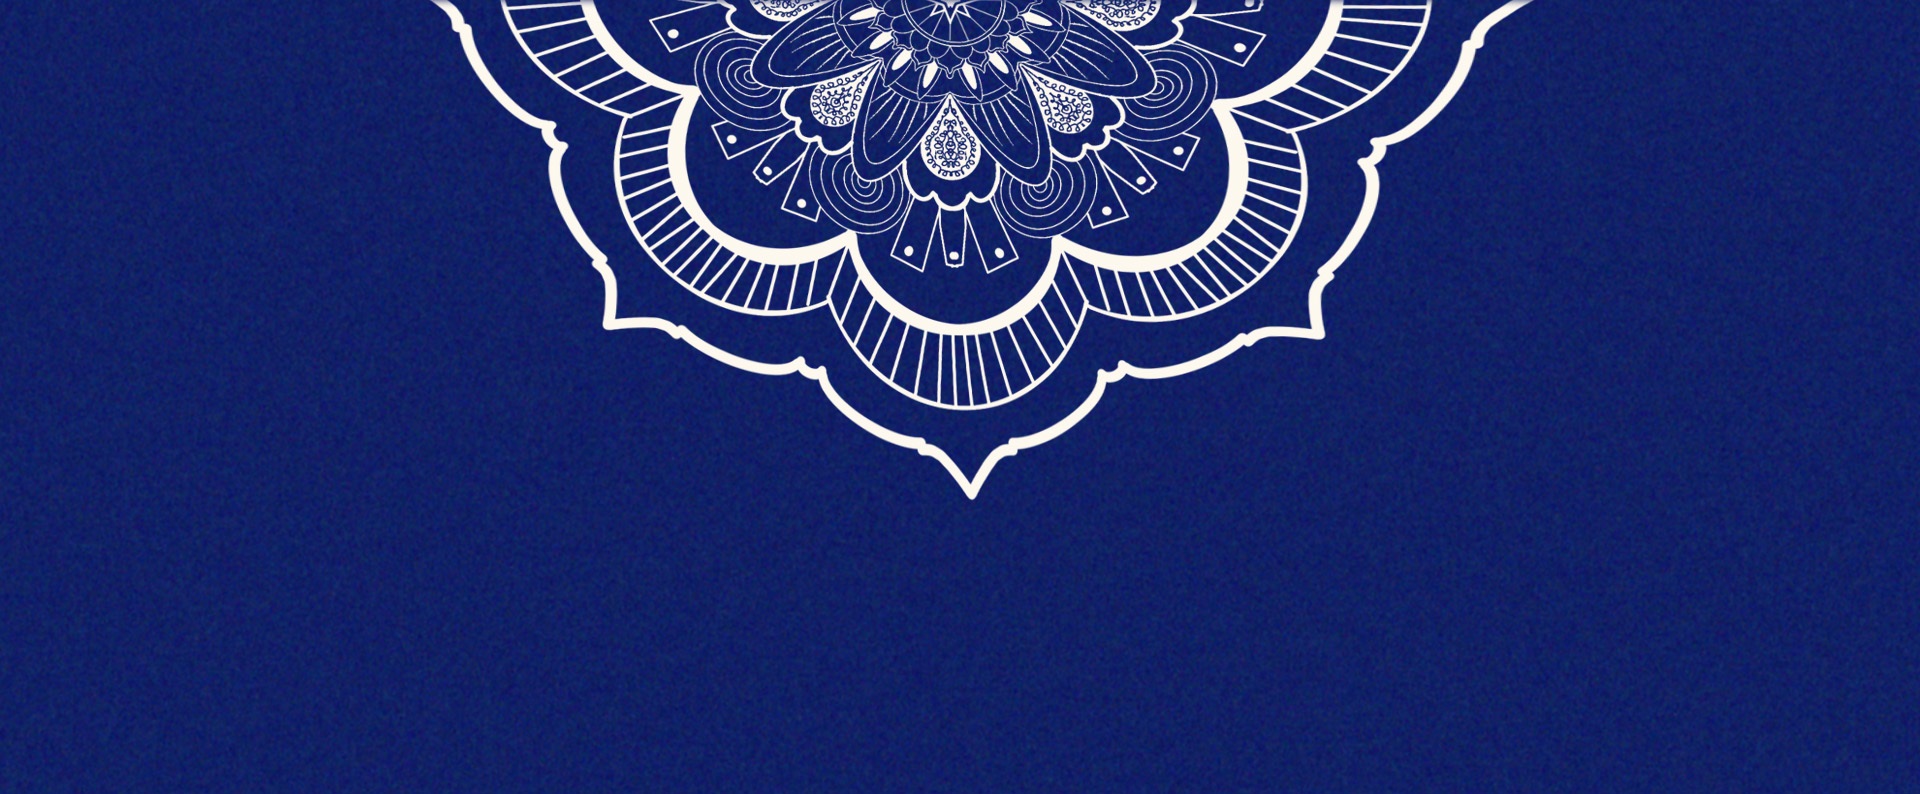 Pngtreevintage blue color lace background 805706